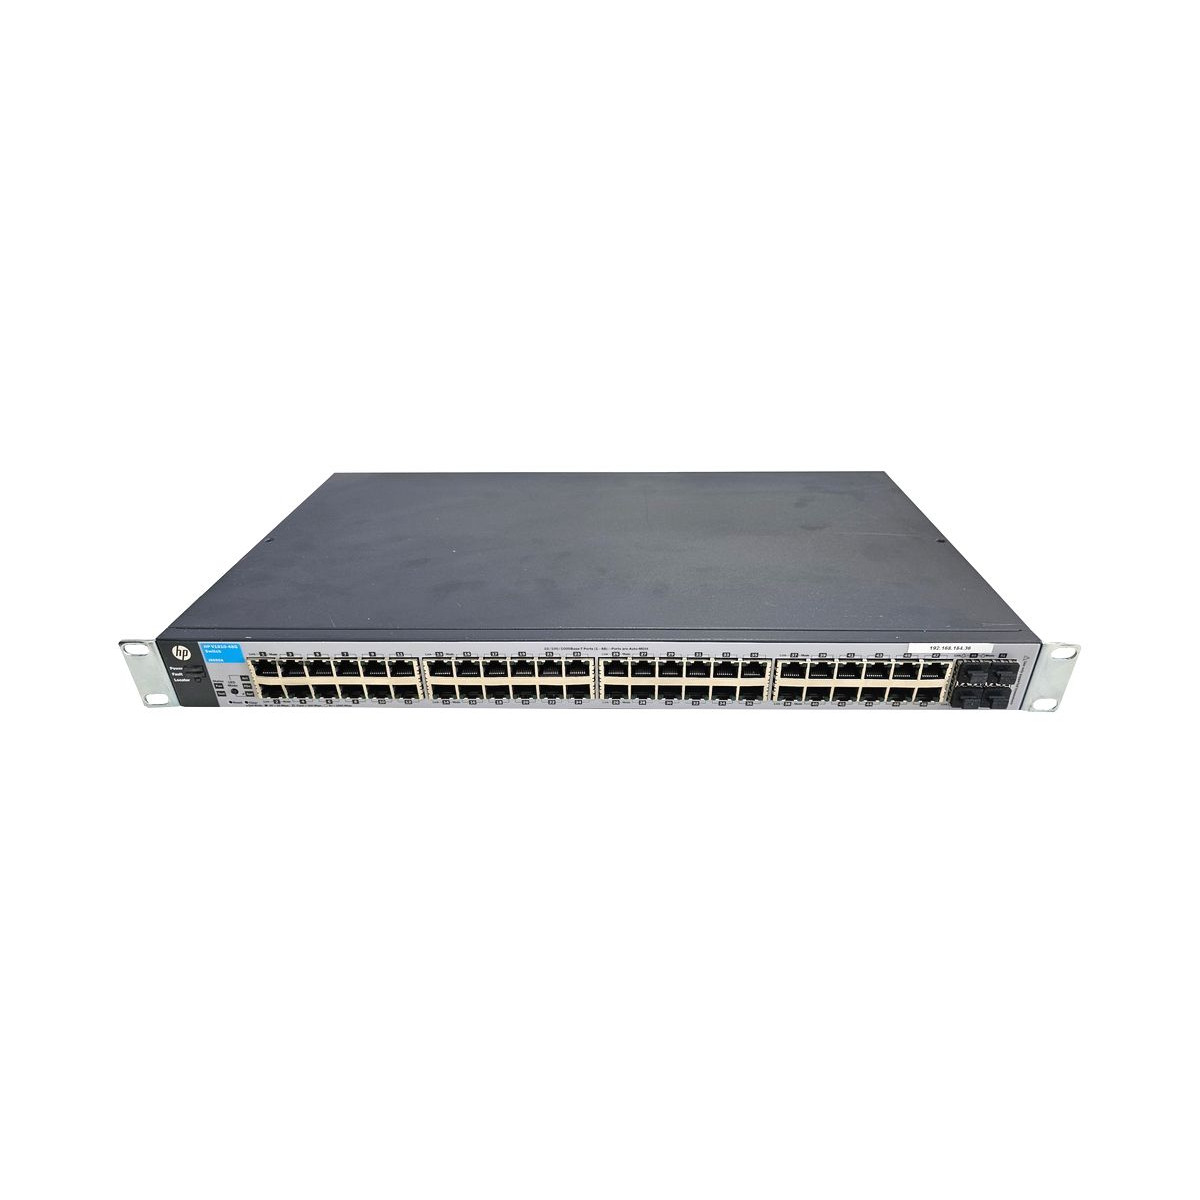 SWITCH HP PROCURVE V1810-48G 48x1GB 4xSFP VLAN J9660A